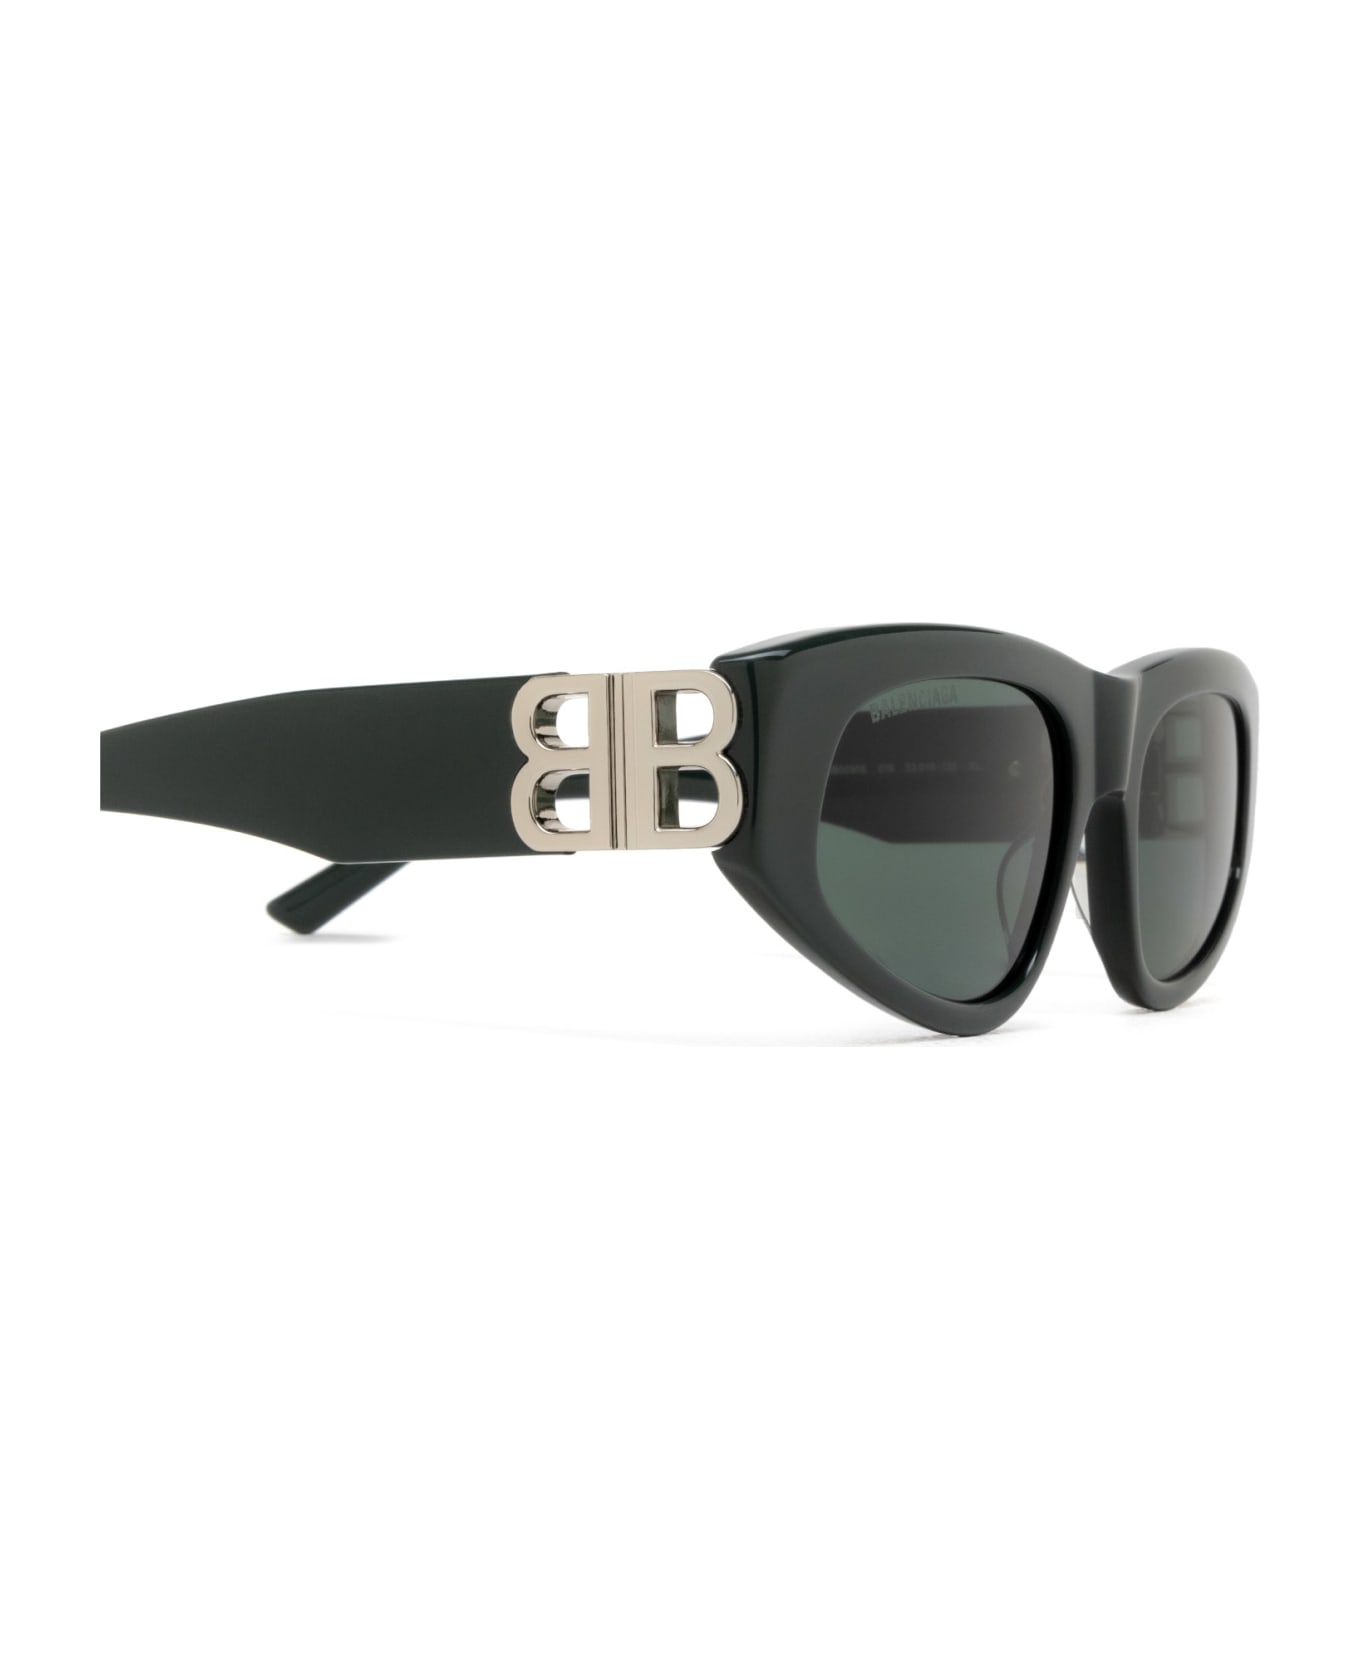 Balenciaga Eyewear Bb0095s Sunglasses - Green サングラス